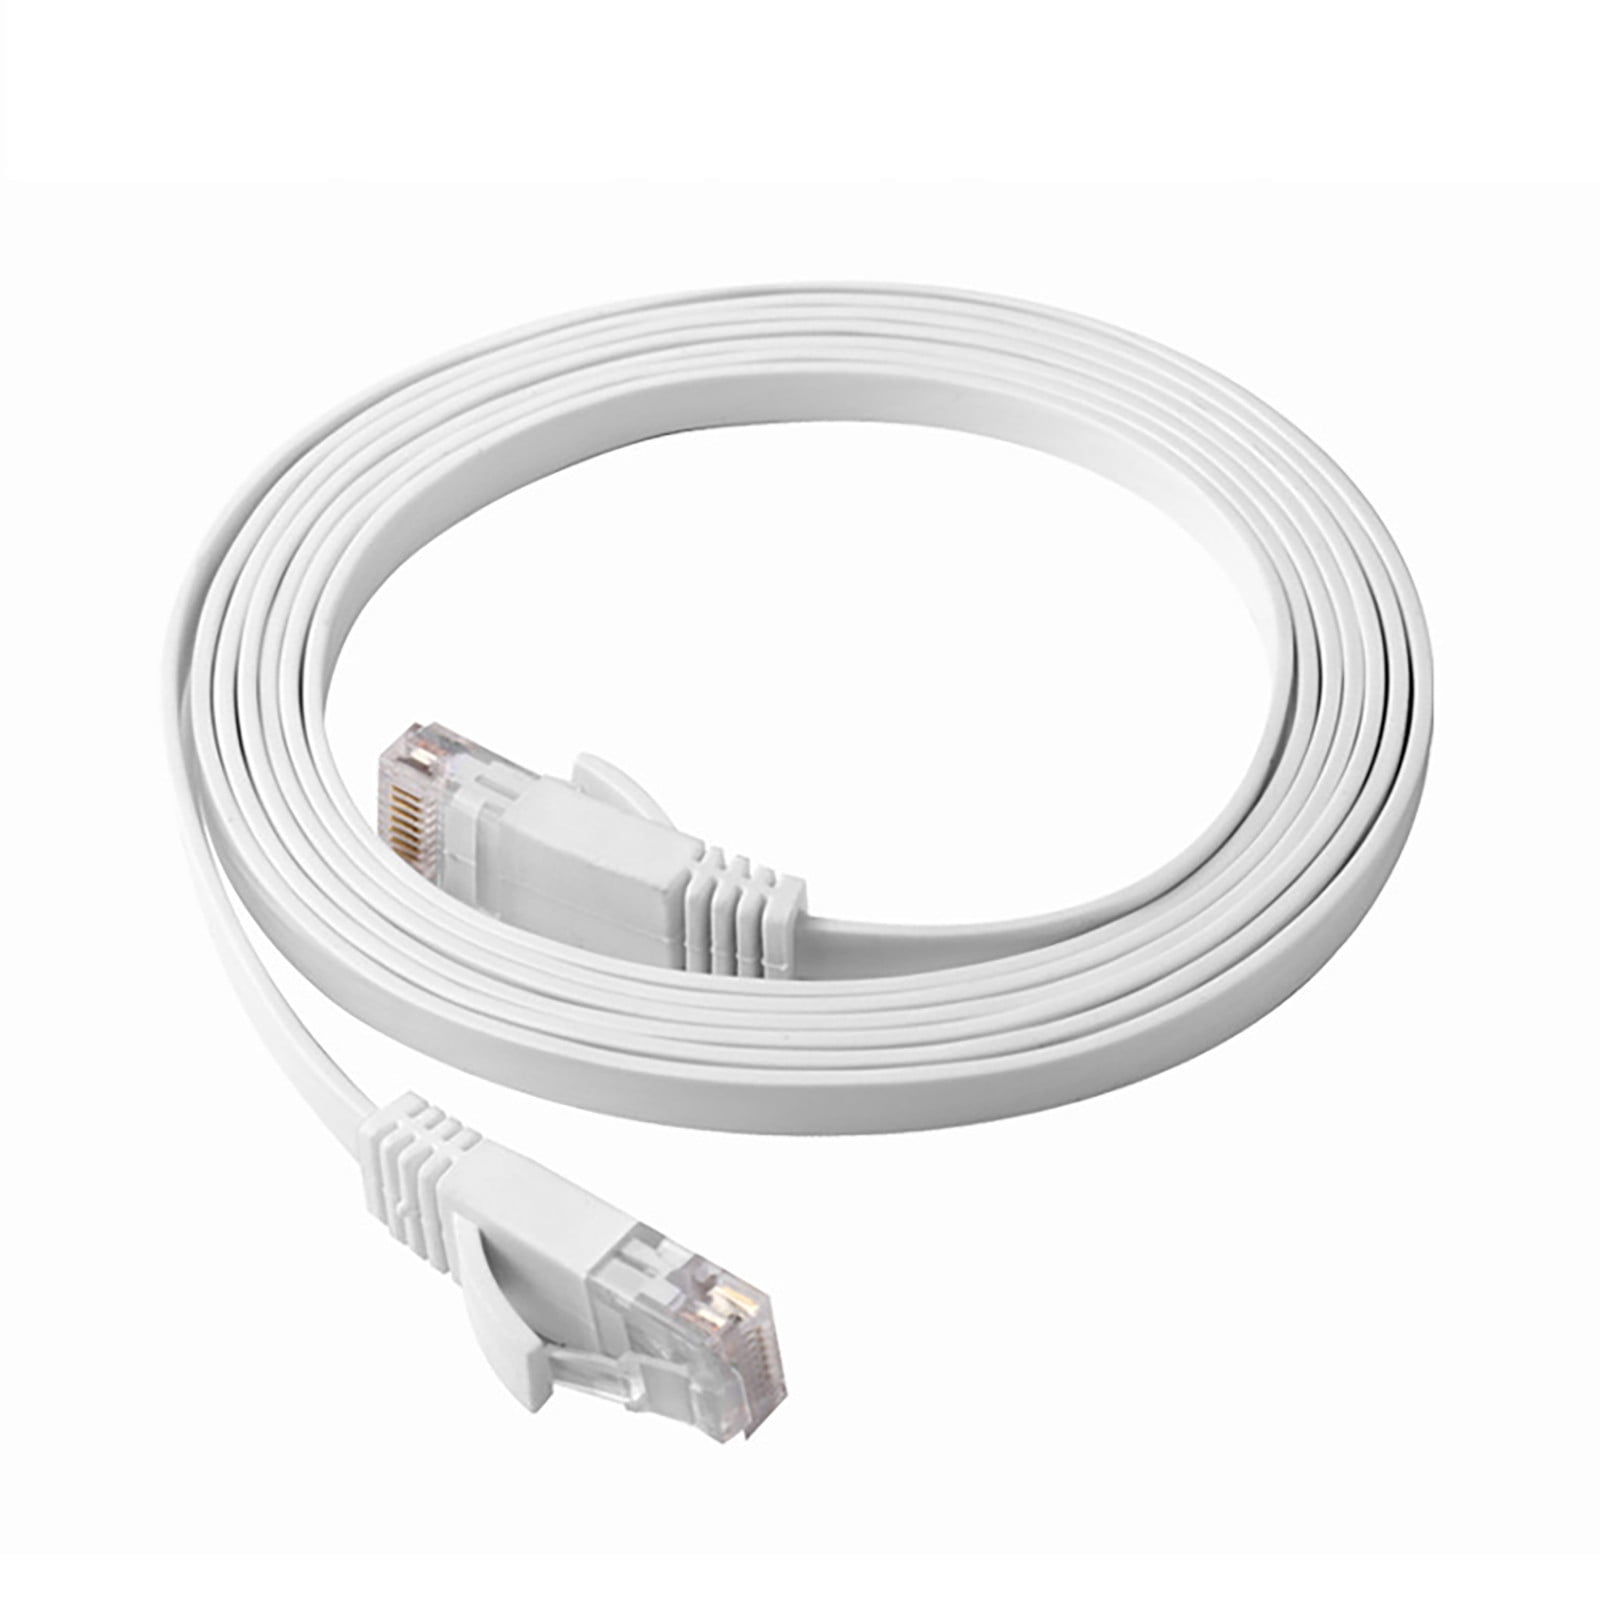 Length Cable CAT6-3 CAT6 Flat Ethernet Unshielded Gigabit RJ45 Network LAN Cable 20m,Ethernet cable Network 